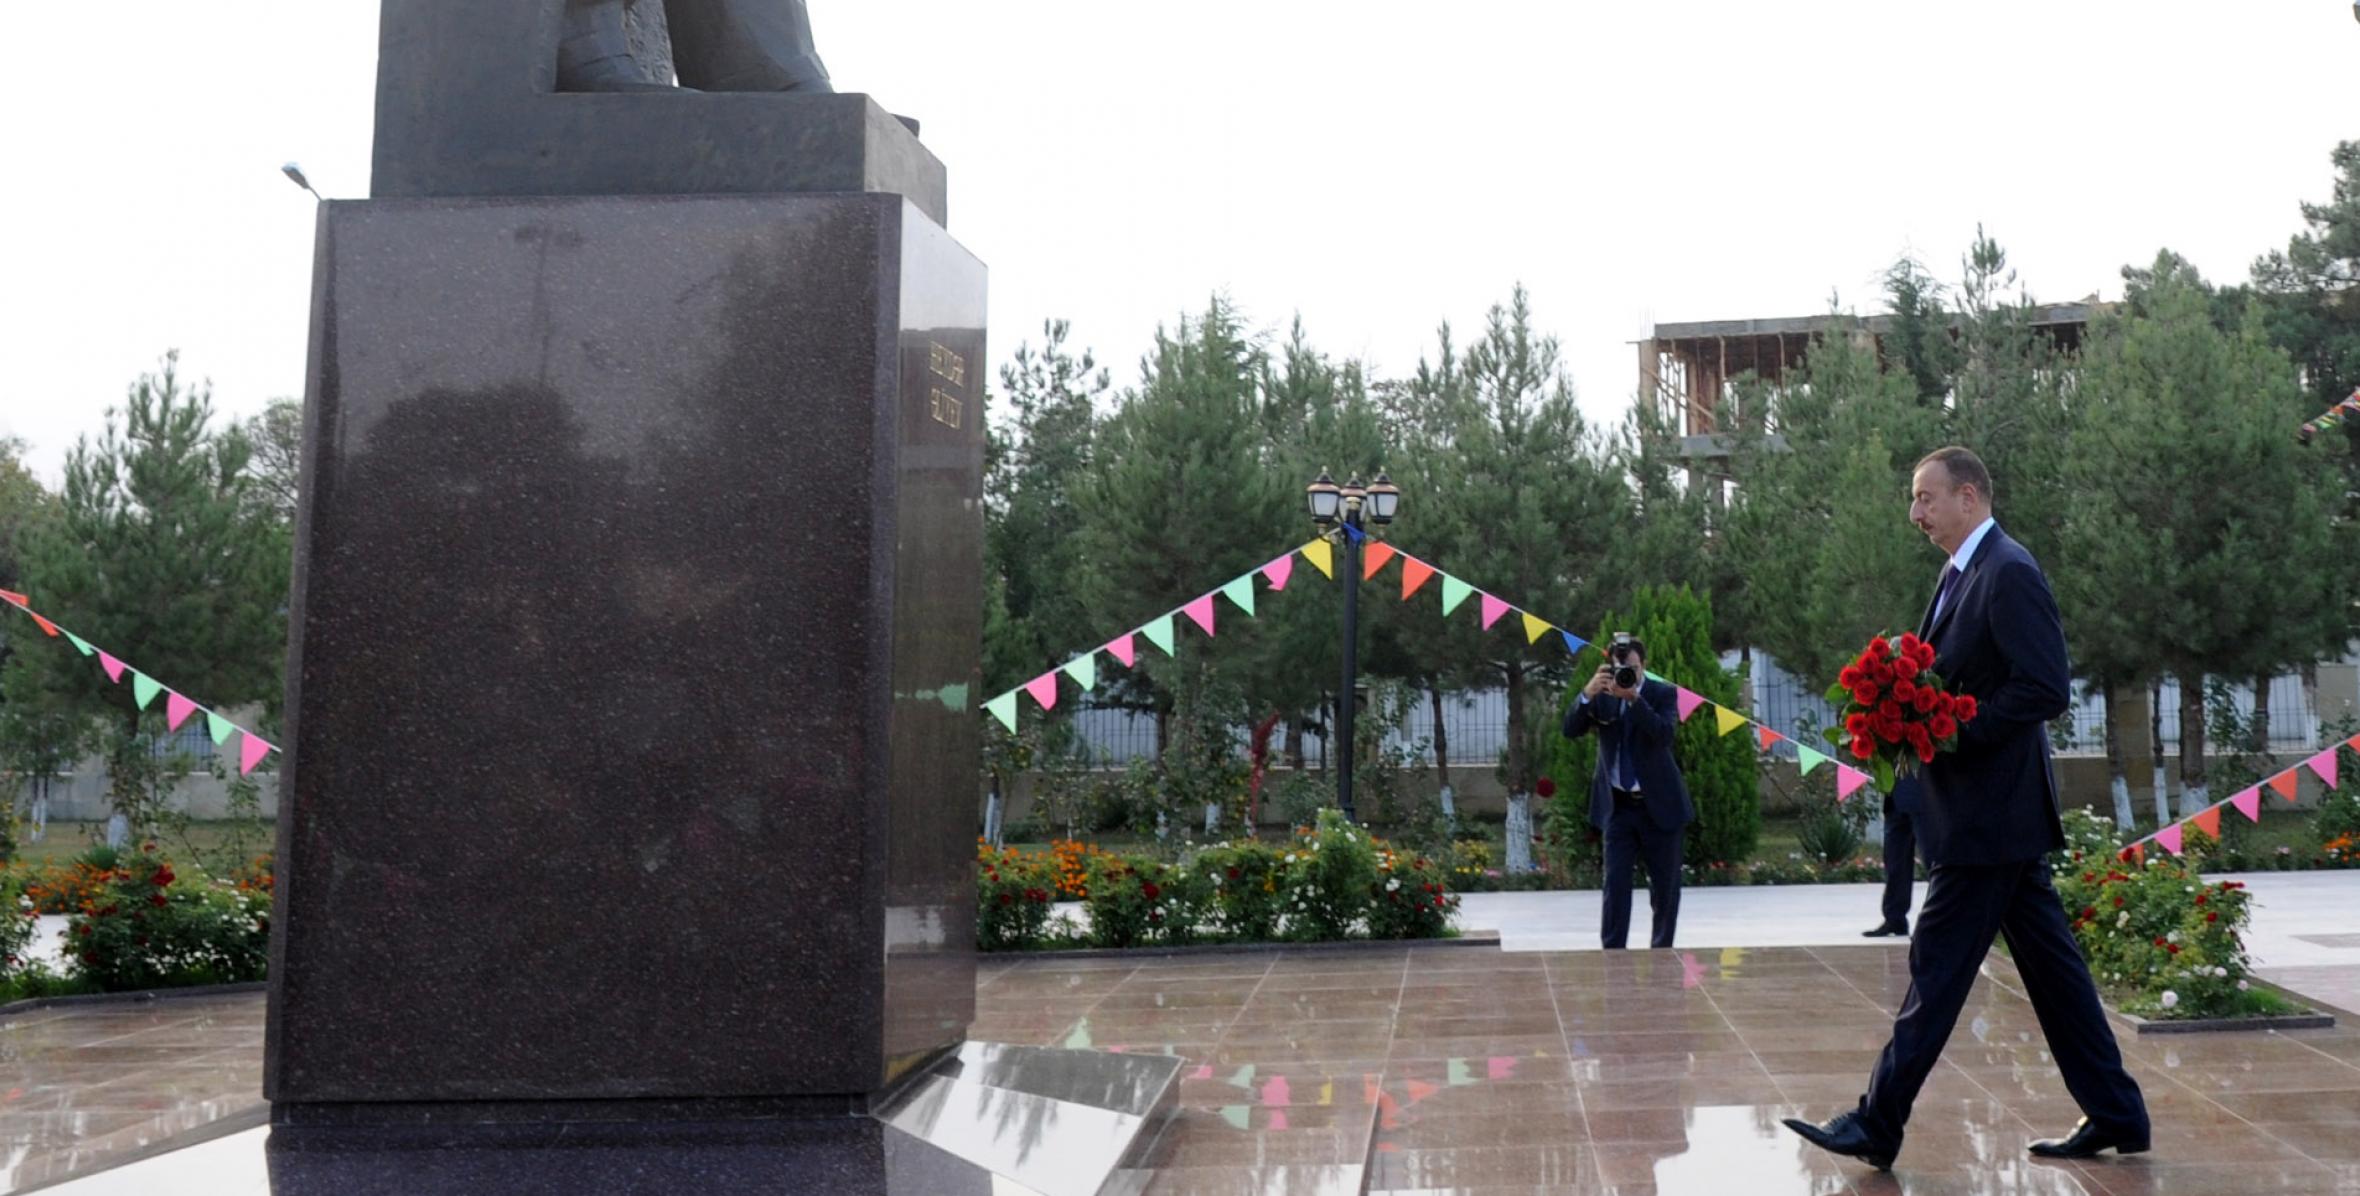 Ilham Aliyev visited a statue of nationwide leader Heydar Aliyev in Zardab